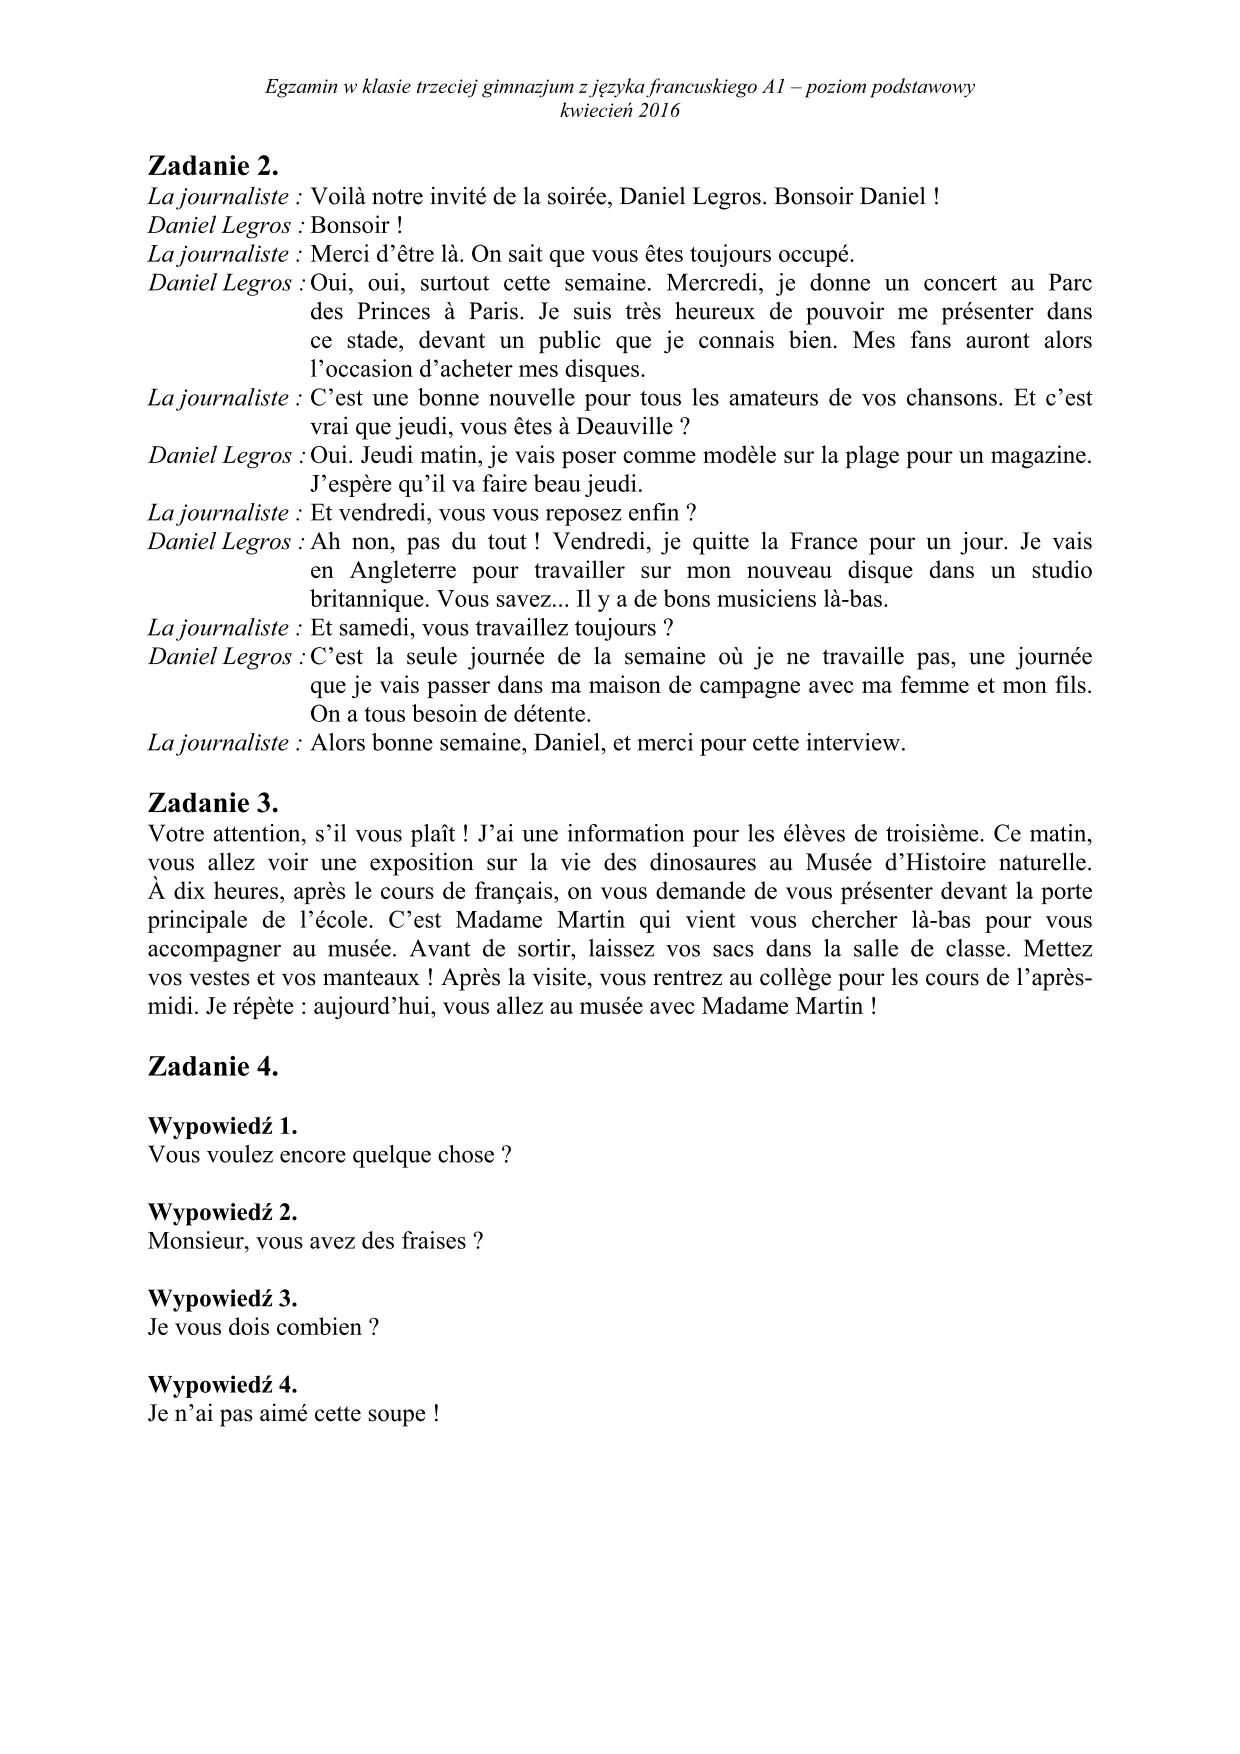 transkrypcja-francuski-poziom-podstawowy-egzamin-gimnazjalny-2016 - 2